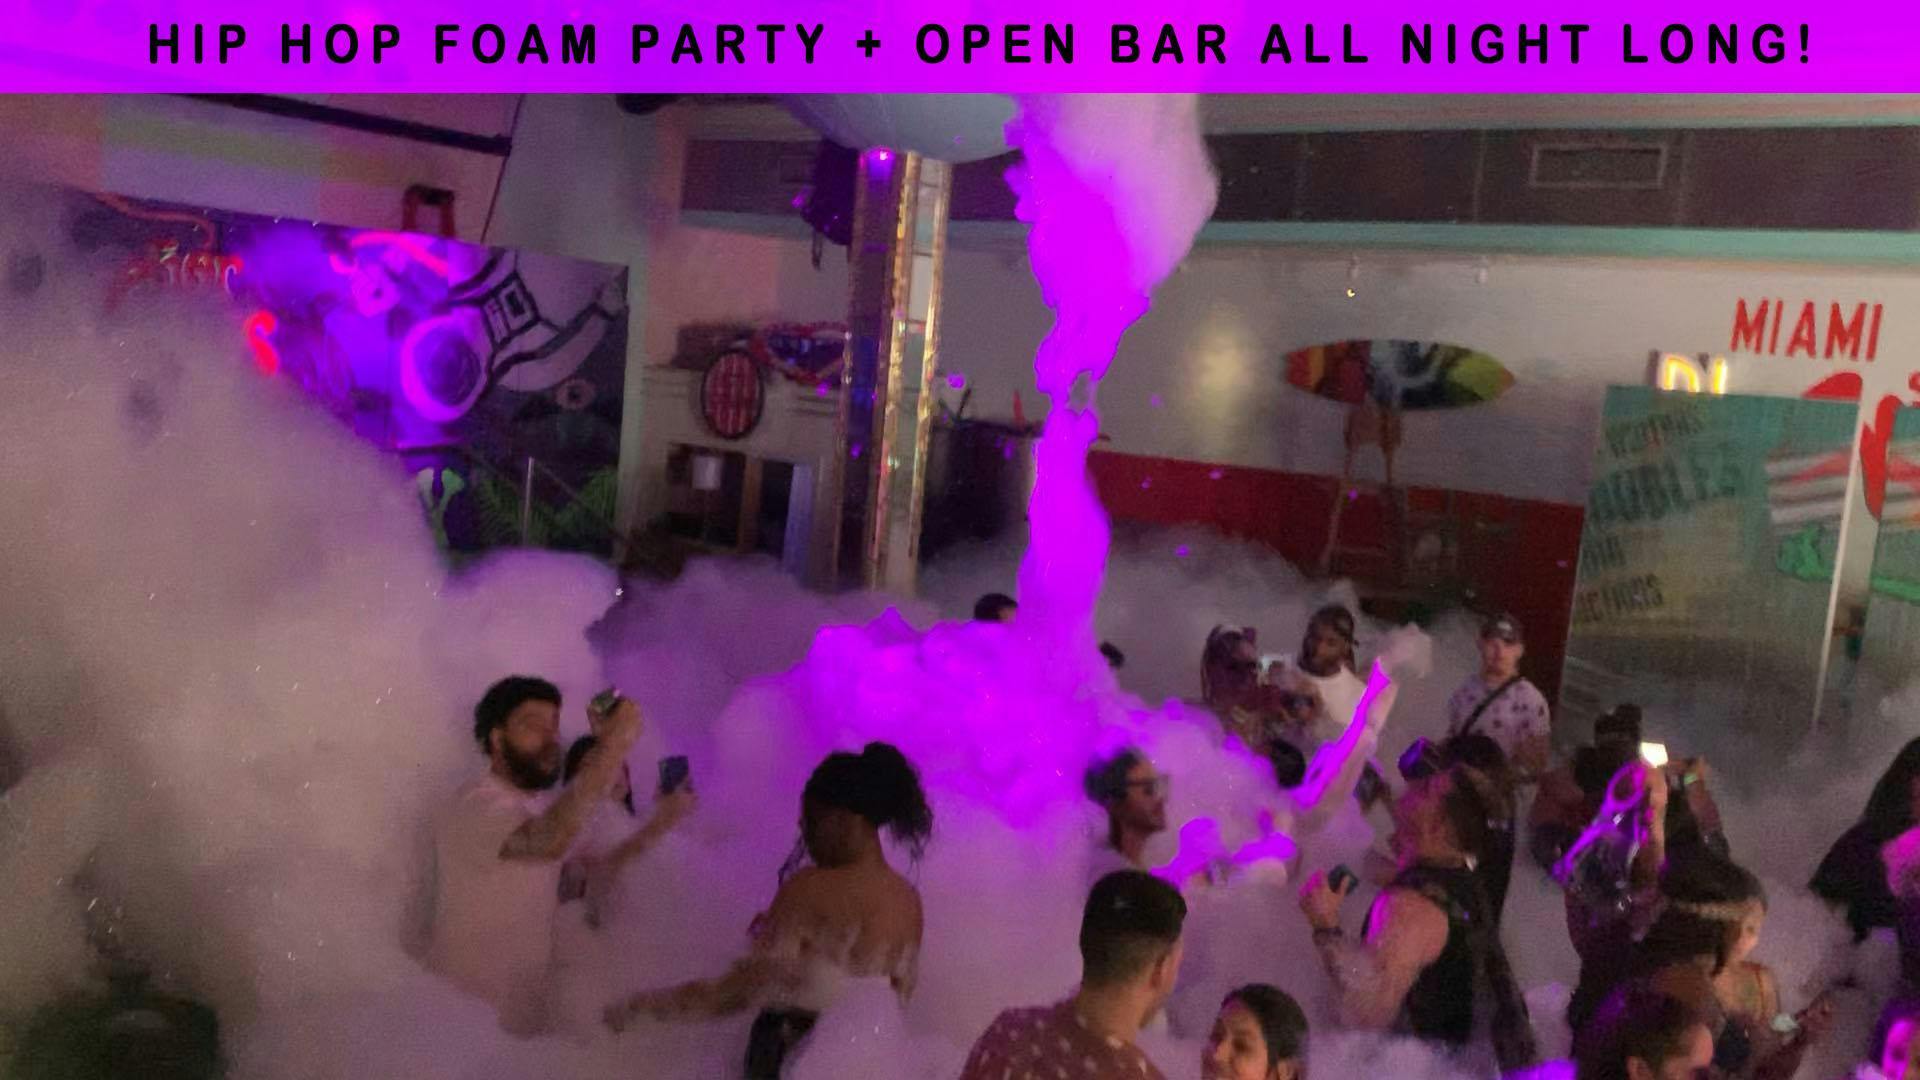 Hip Hop Sunday FOAM PARTY + Open Bar All Night Long! - Miami Beach